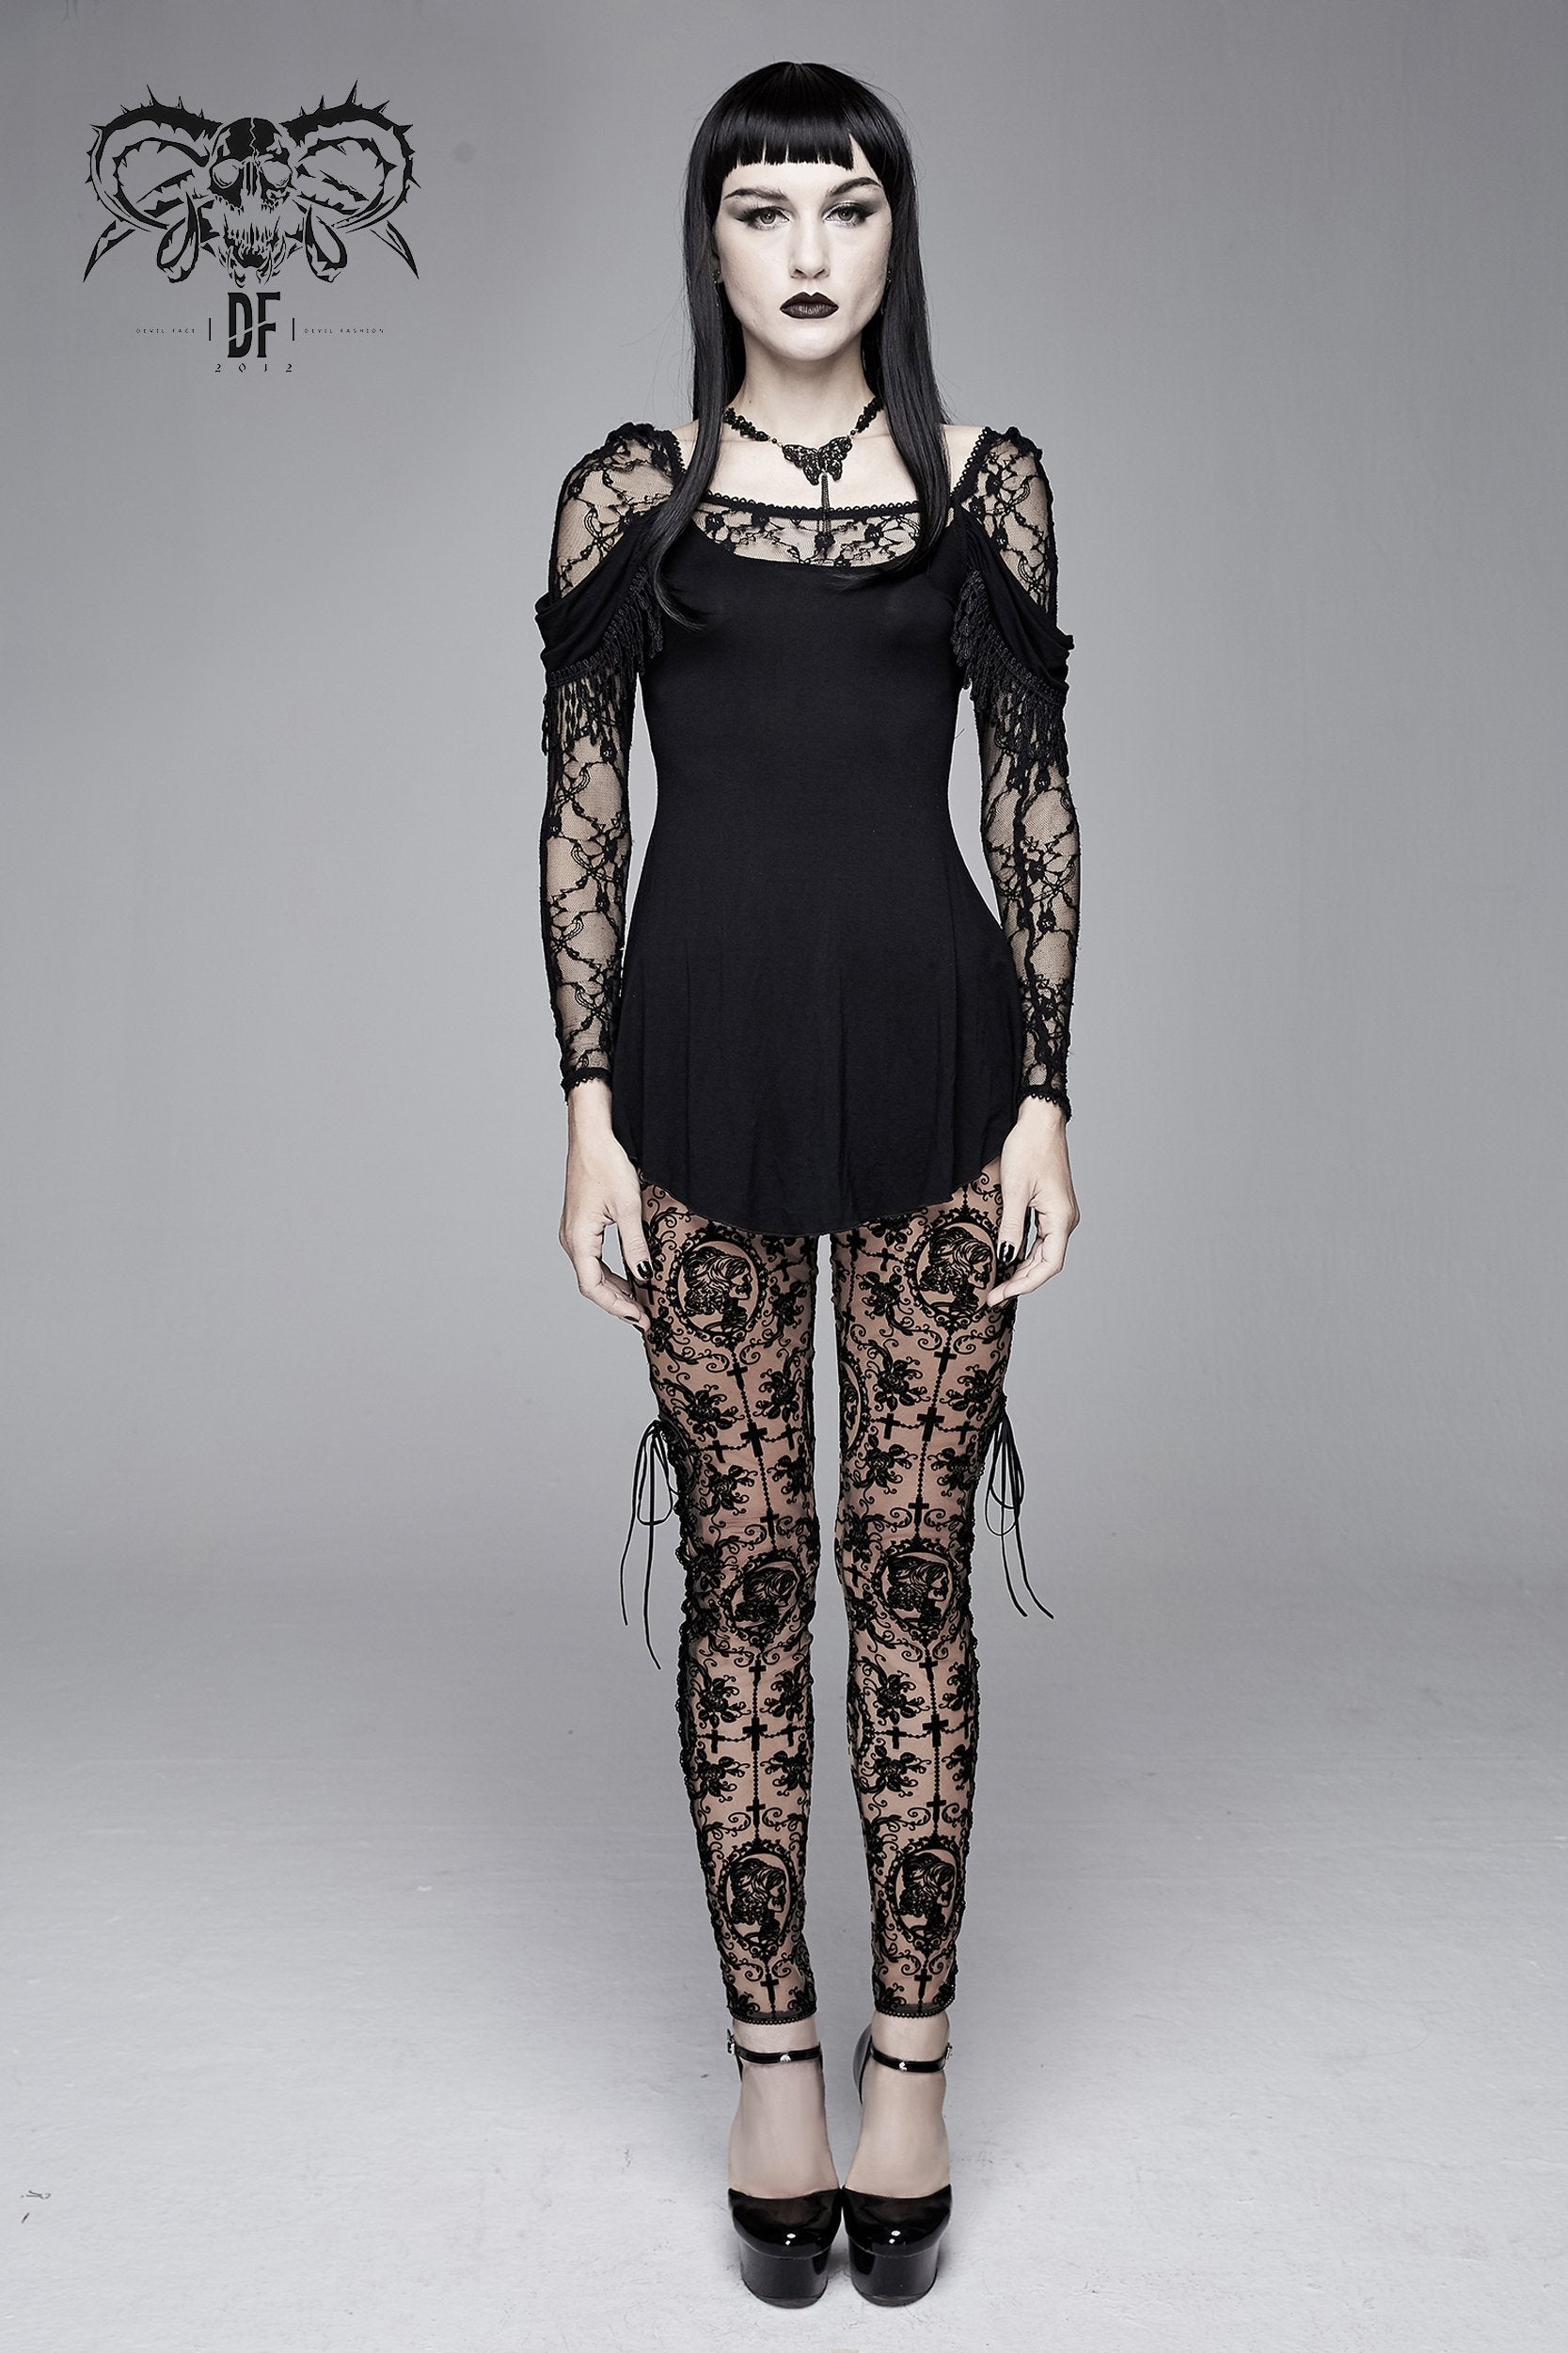 Black patterned leggings, Women's gothic clothing